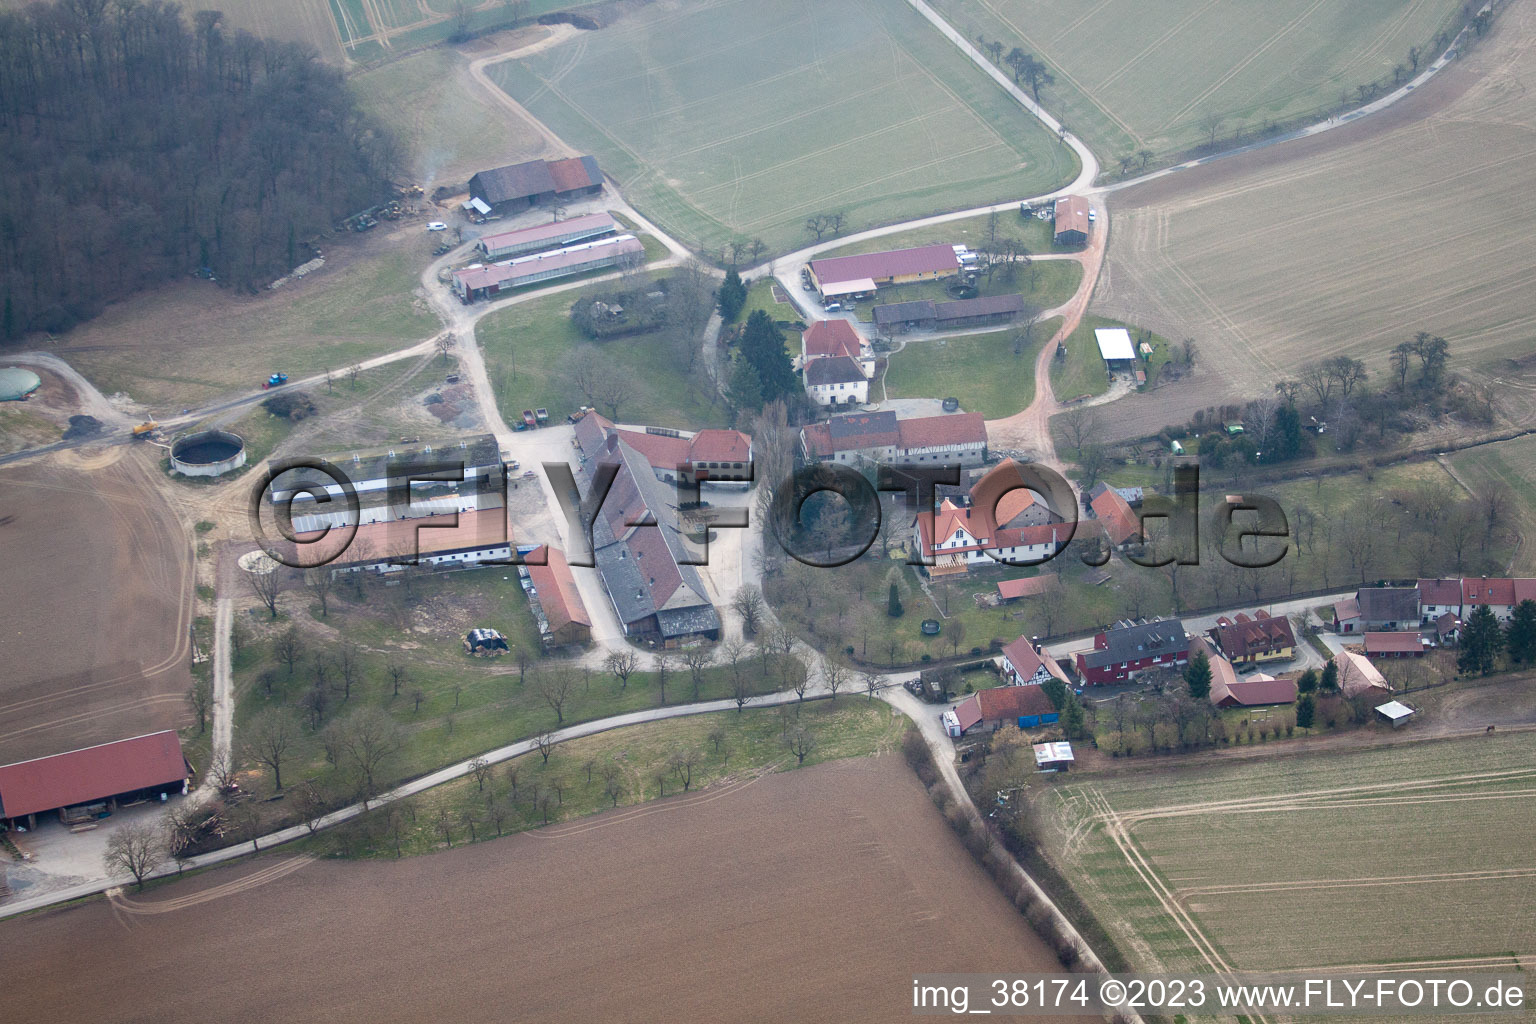 Siegelsbach dans le département Bade-Wurtemberg, Allemagne hors des airs